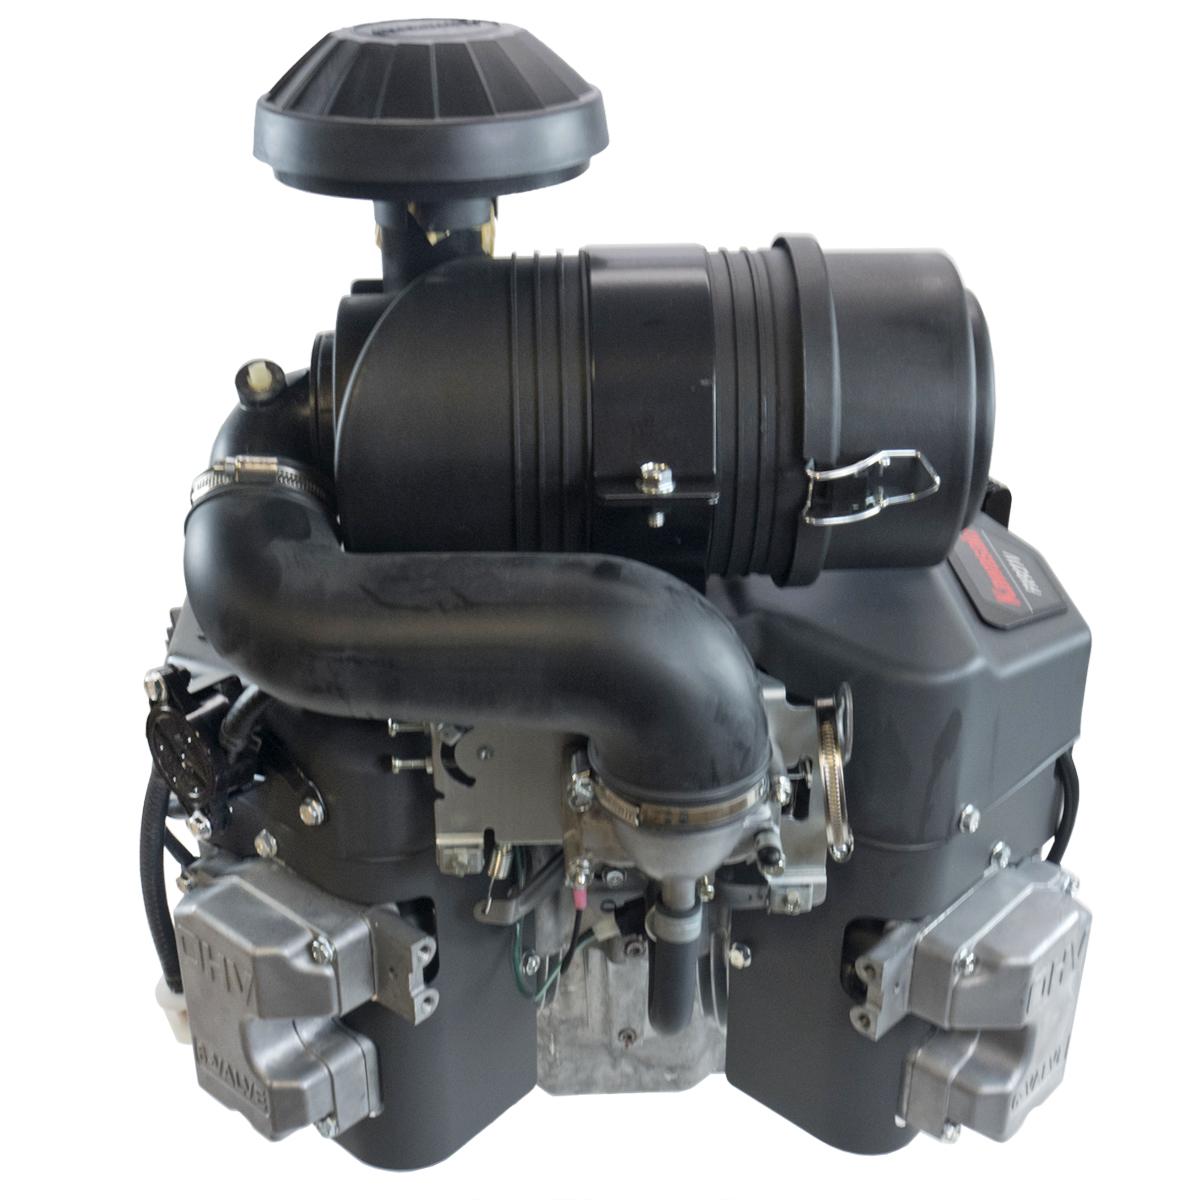 FX921V-S04 31HP Vertical 1-1/8"x4-9/32", FX Series, Snorkel Air Cleaner, Electric Start, 15 Amp, Oil Cooler, Kawasaki Engine